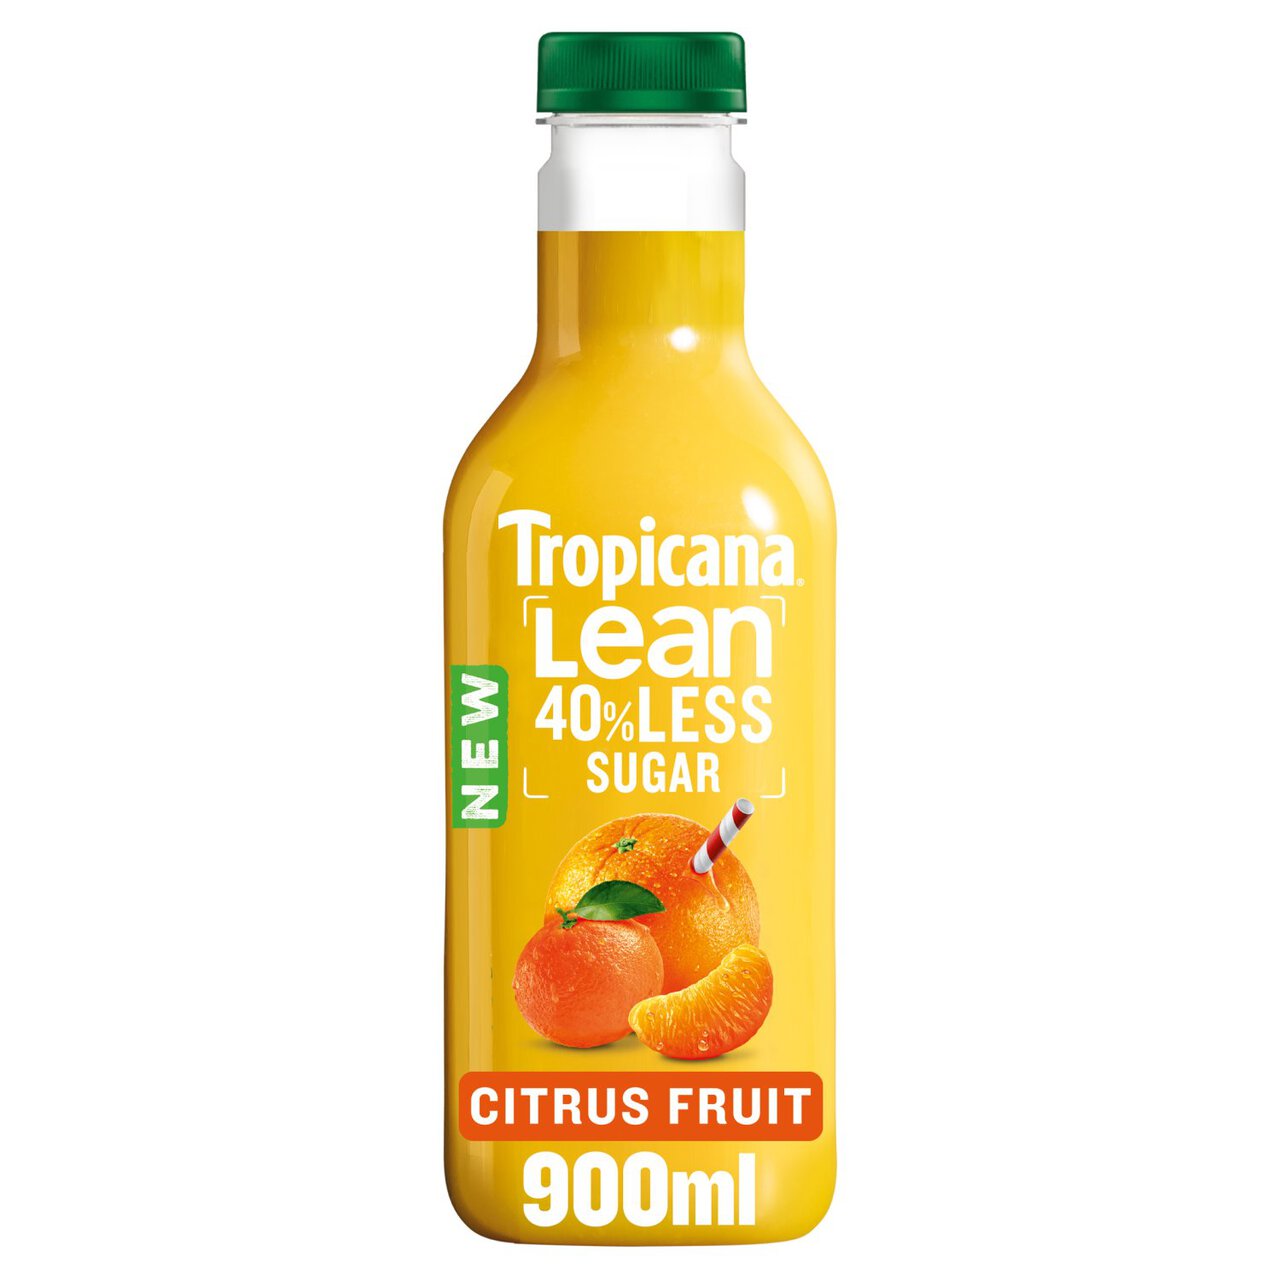 Tropicana Lean Citrus Fruit Orange & Clementine 900ml